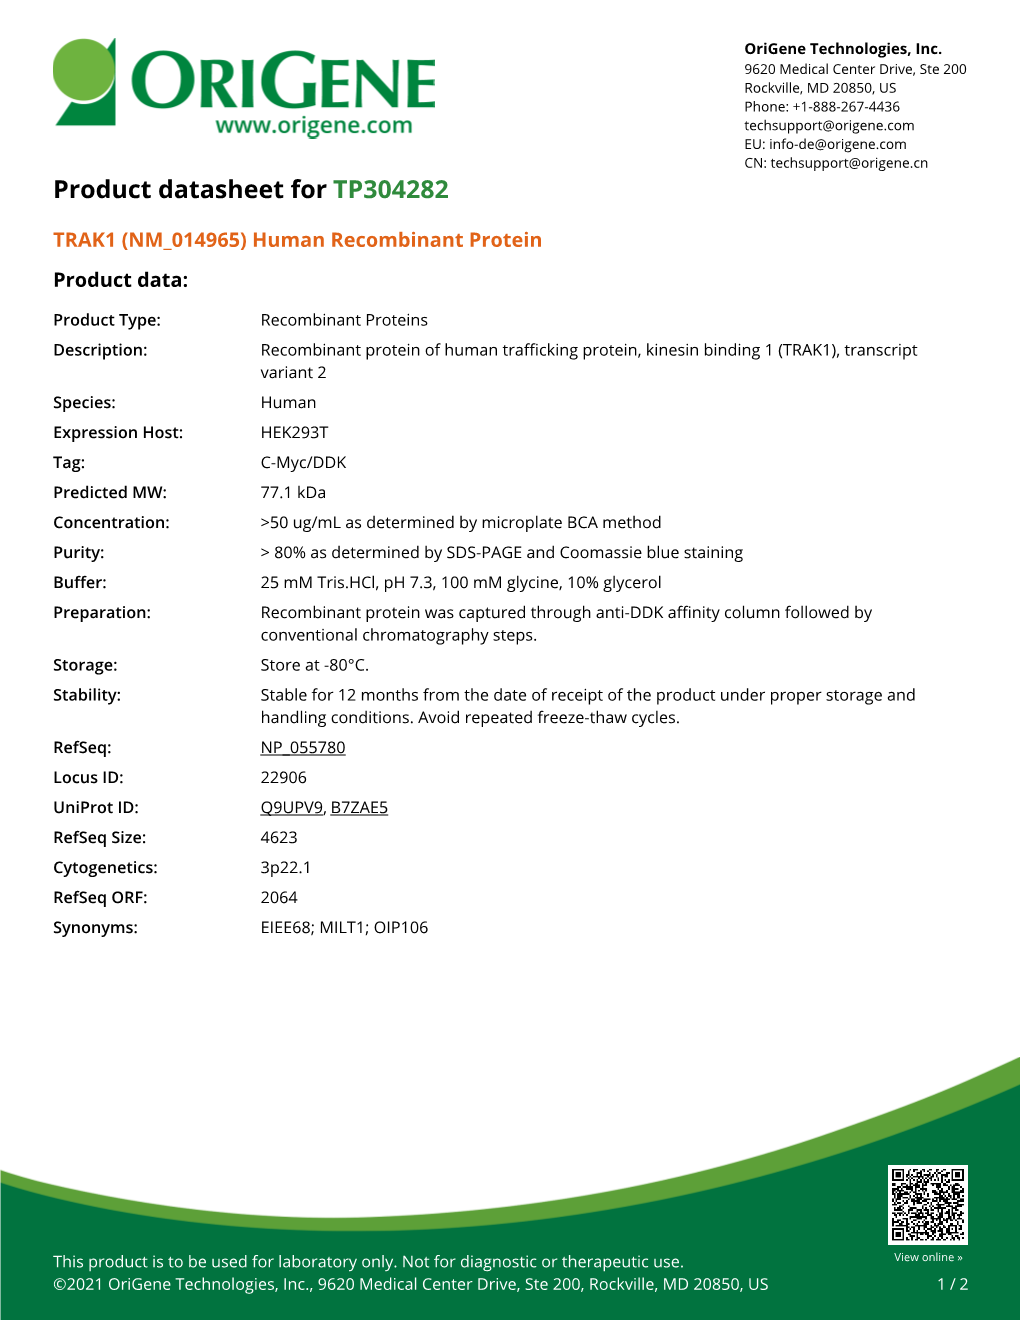 TRAK1 (NM 014965) Human Recombinant Protein – TP304282 | Origene